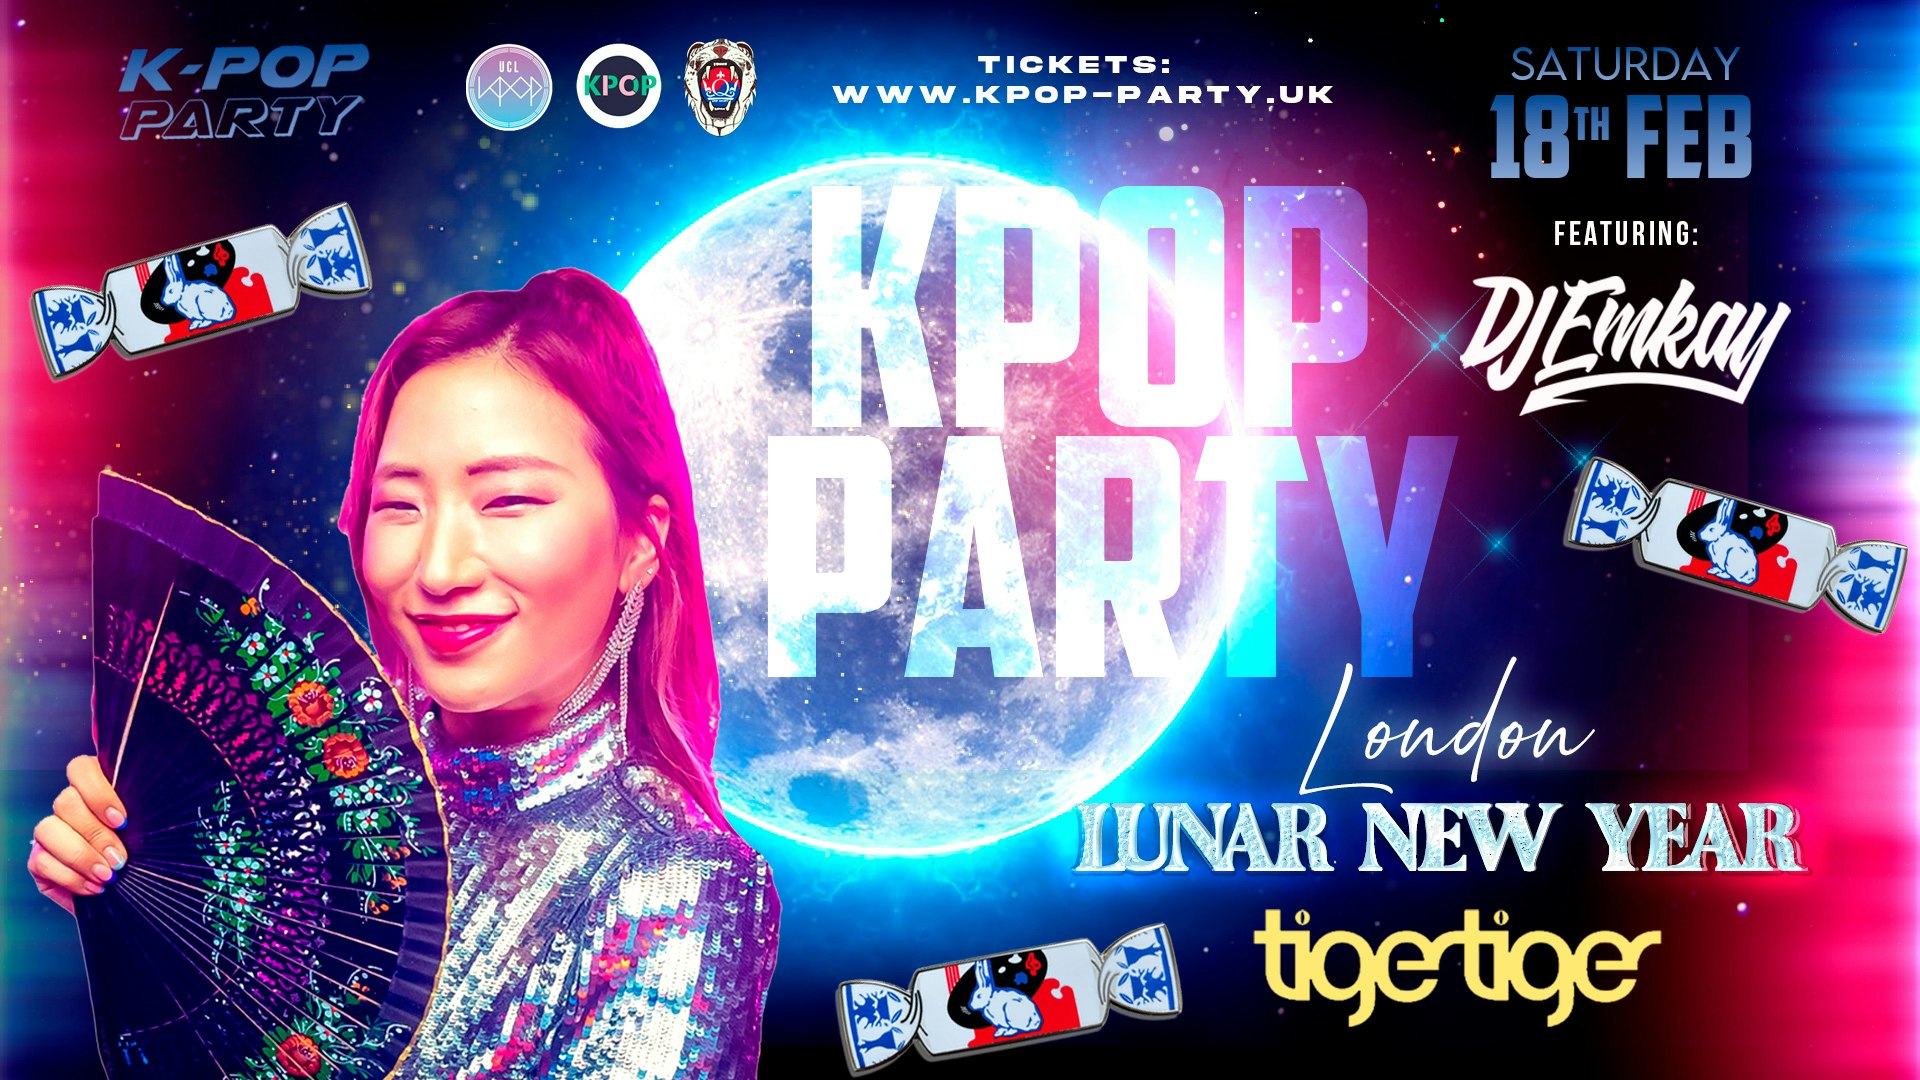 K-Pop Party London – LUNAR NEW YEAR with DJ EMKAY | Saturday 18th February